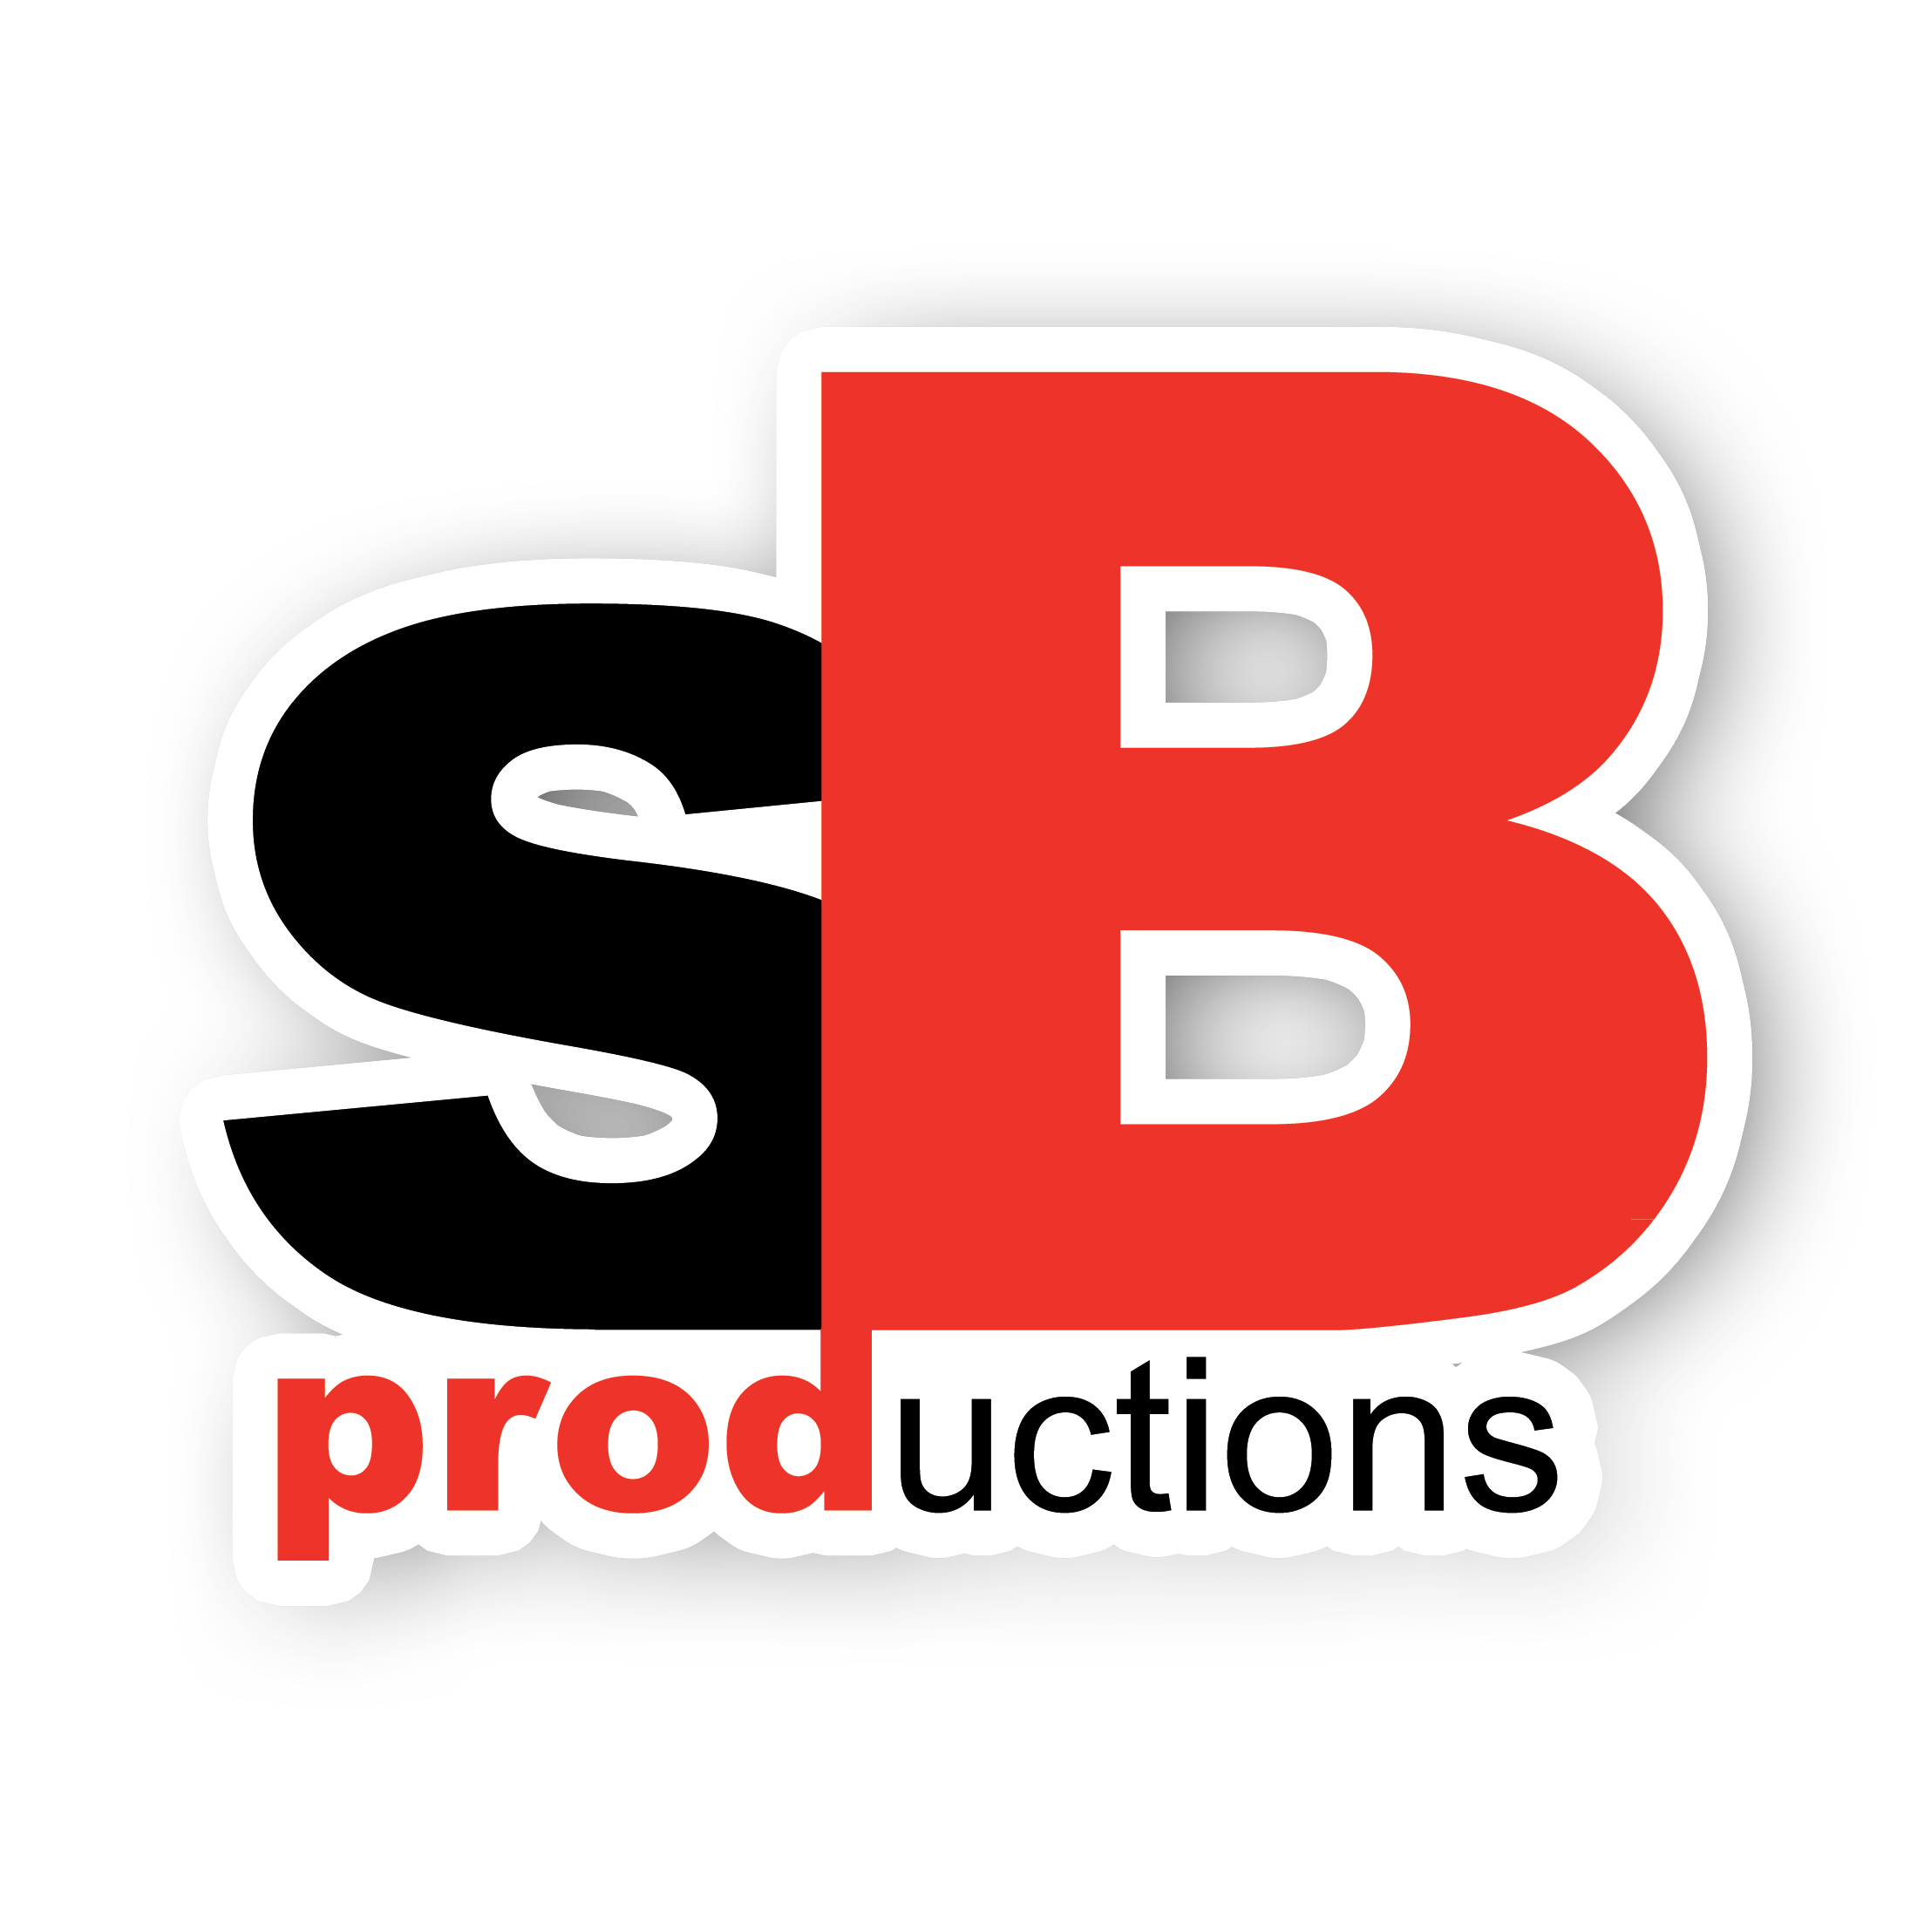 Sb productions